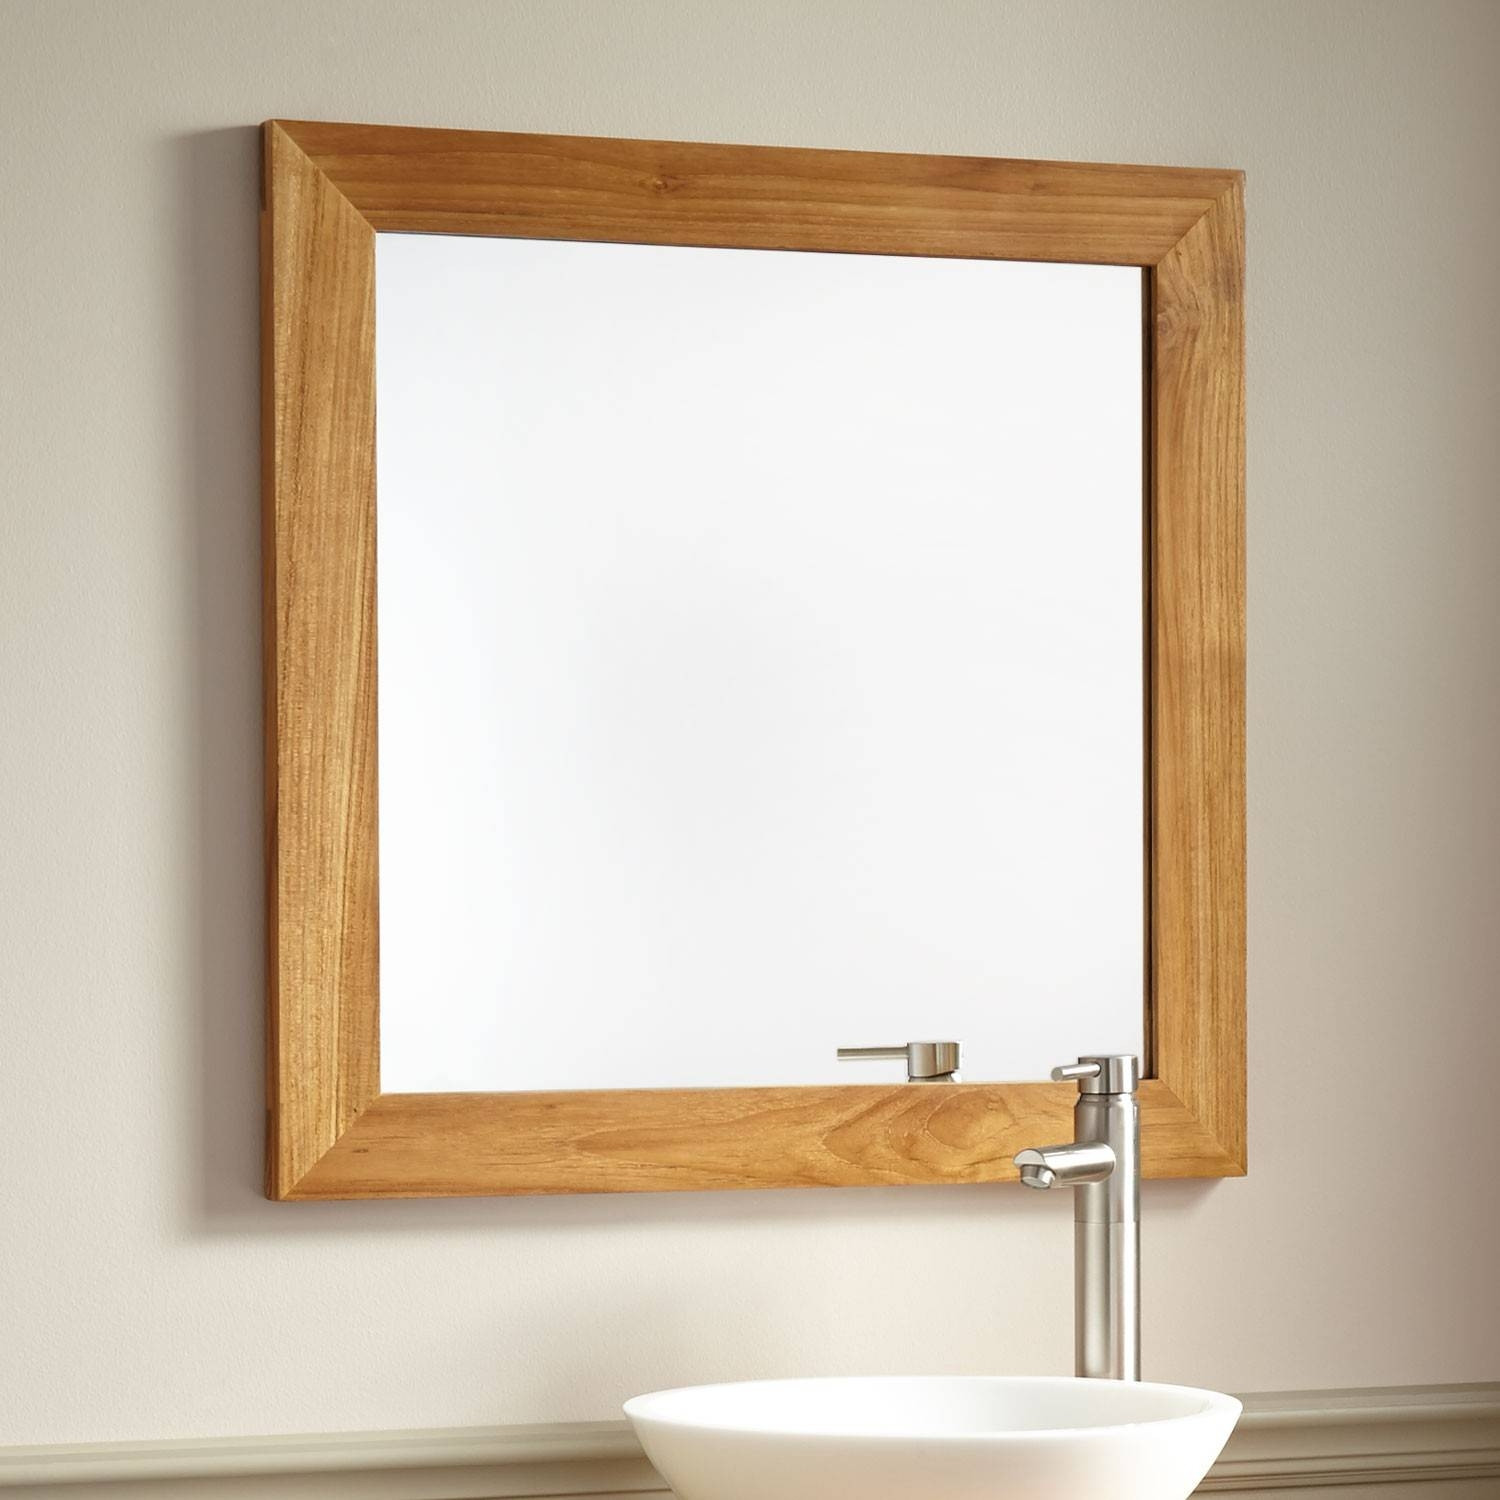 Oak Bathroom Mirror
 Top 15 of Oak Wall Mirrors